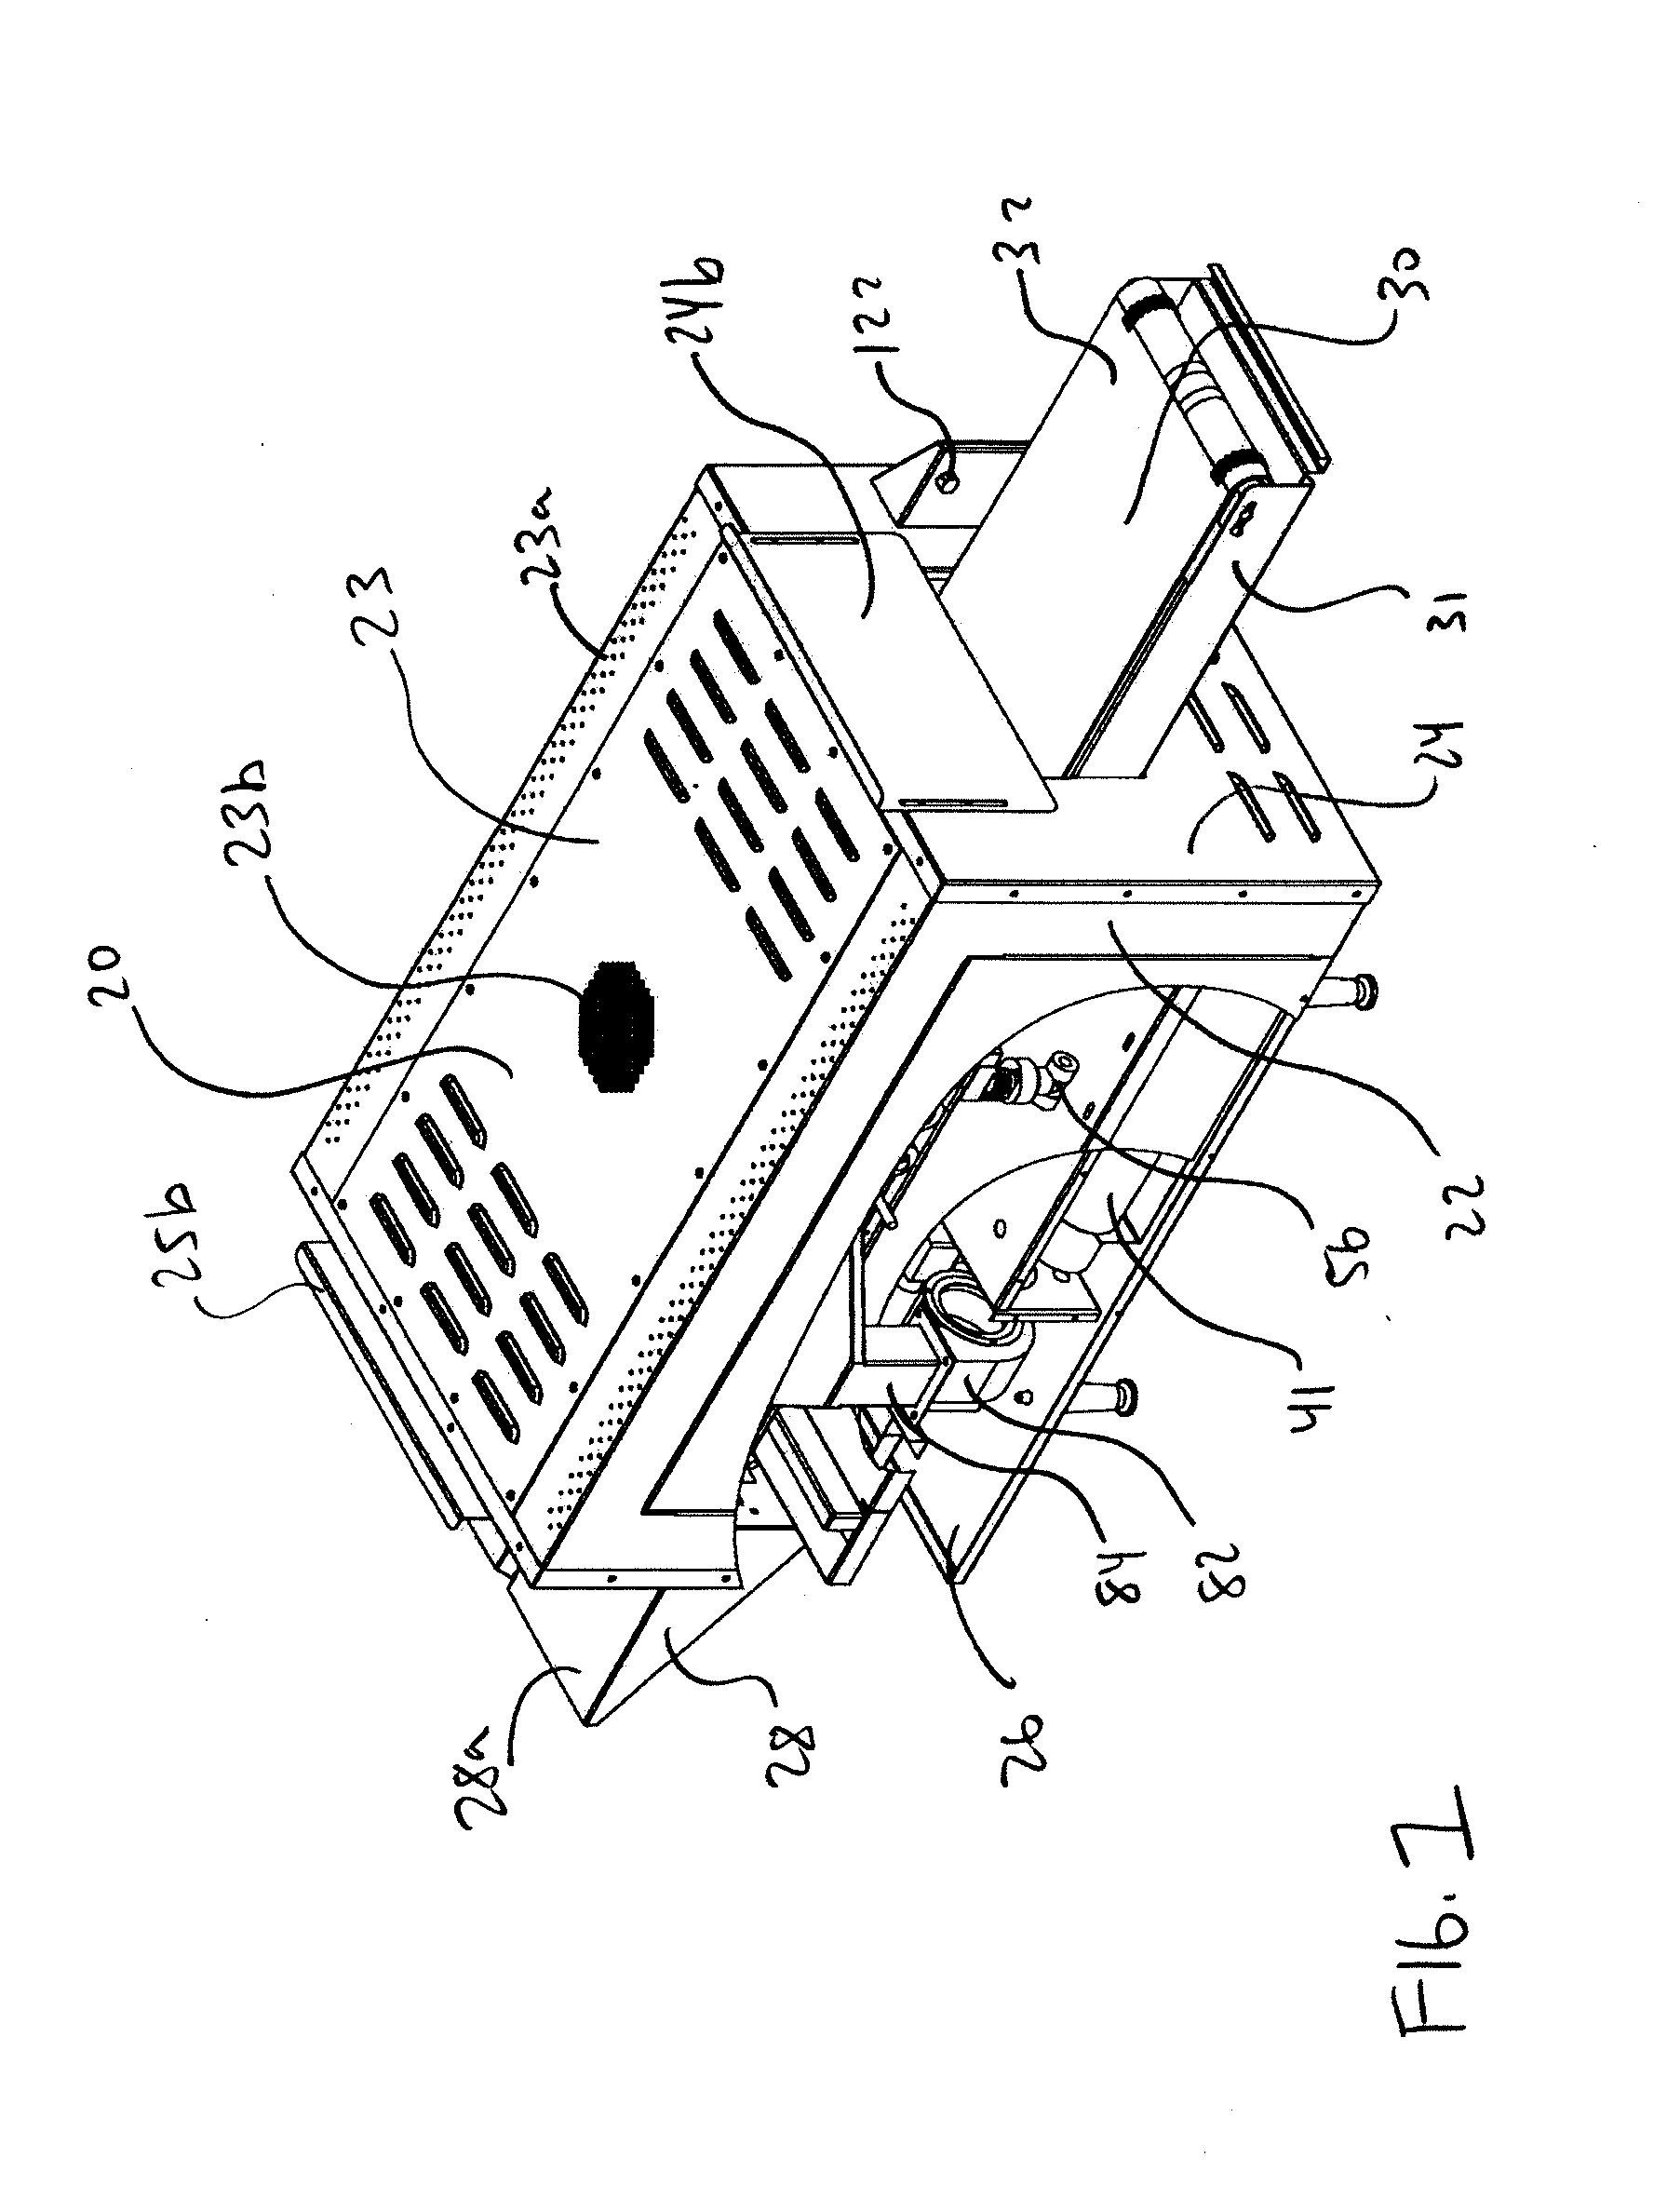 Combination Conveyor Oven